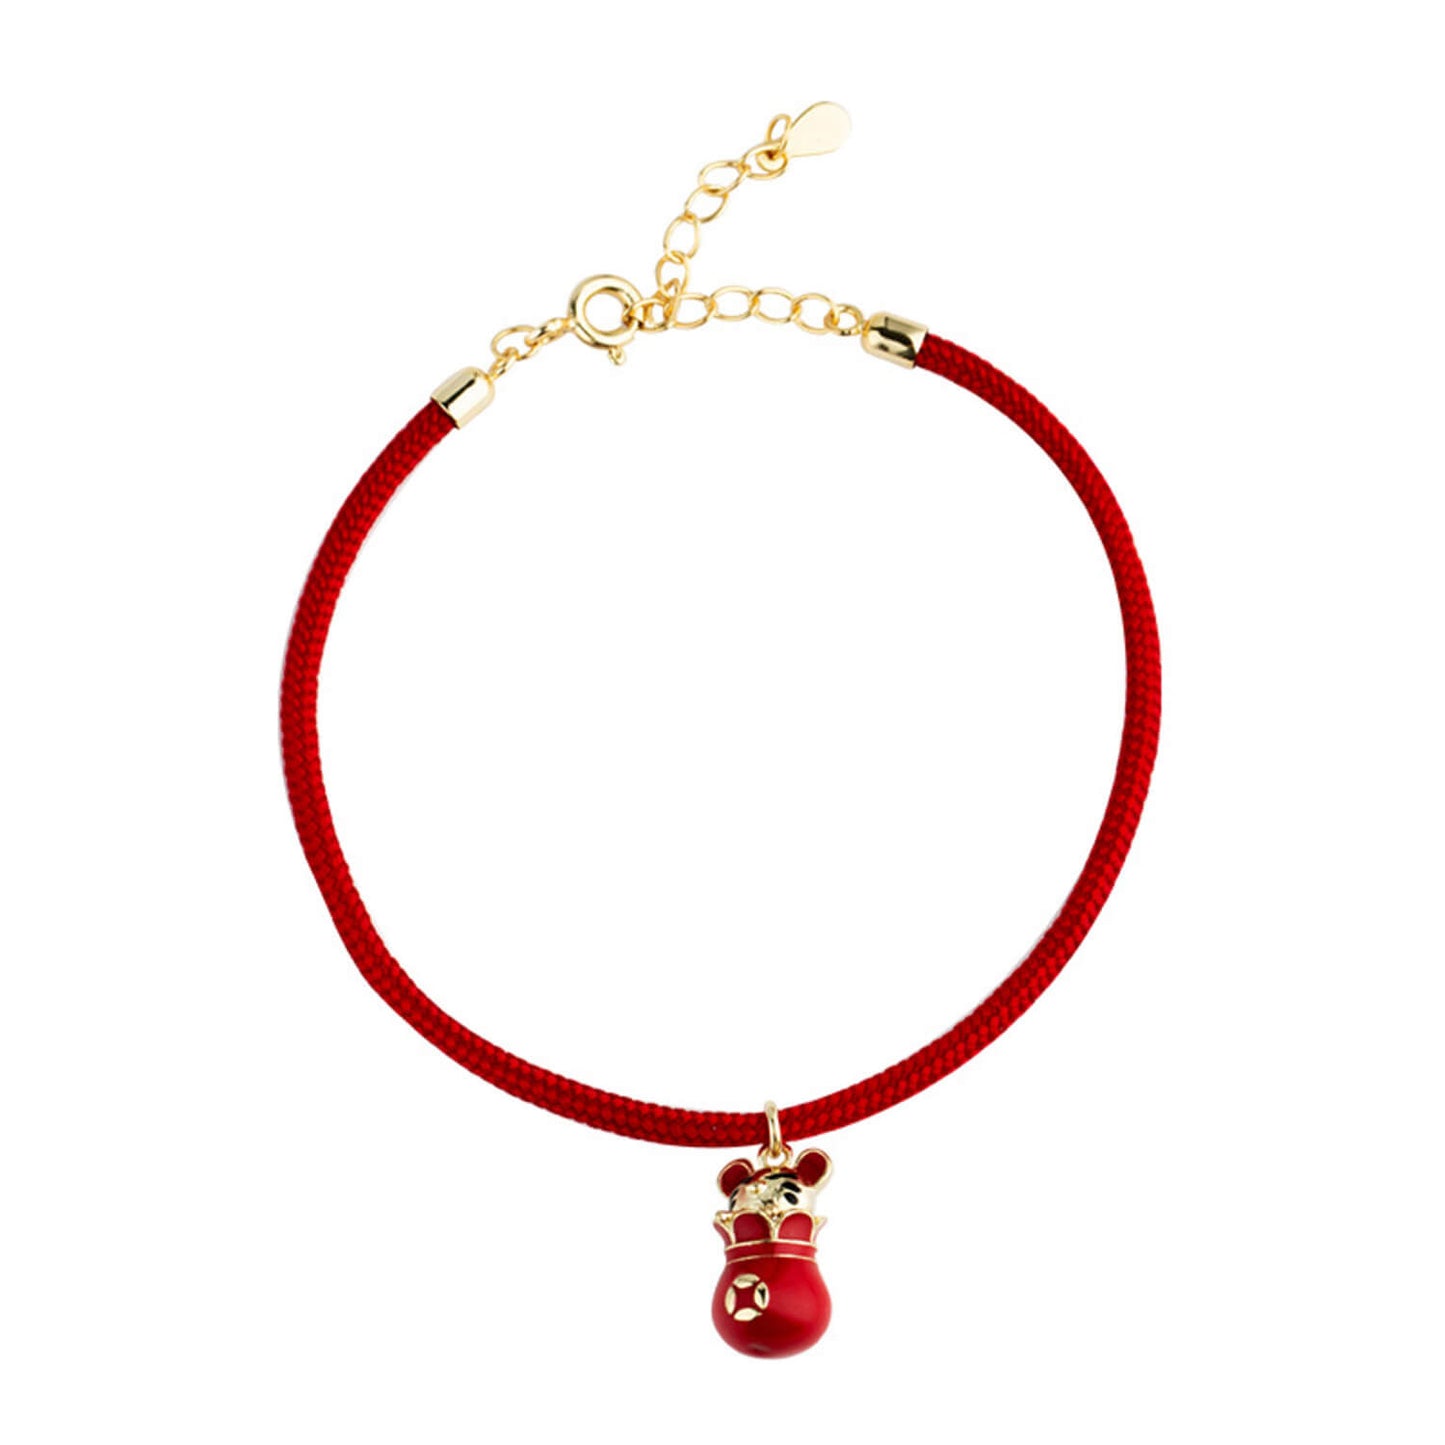 Jimmy Sterling Silver Jewelry Red String Lucky Cat Bracelet,